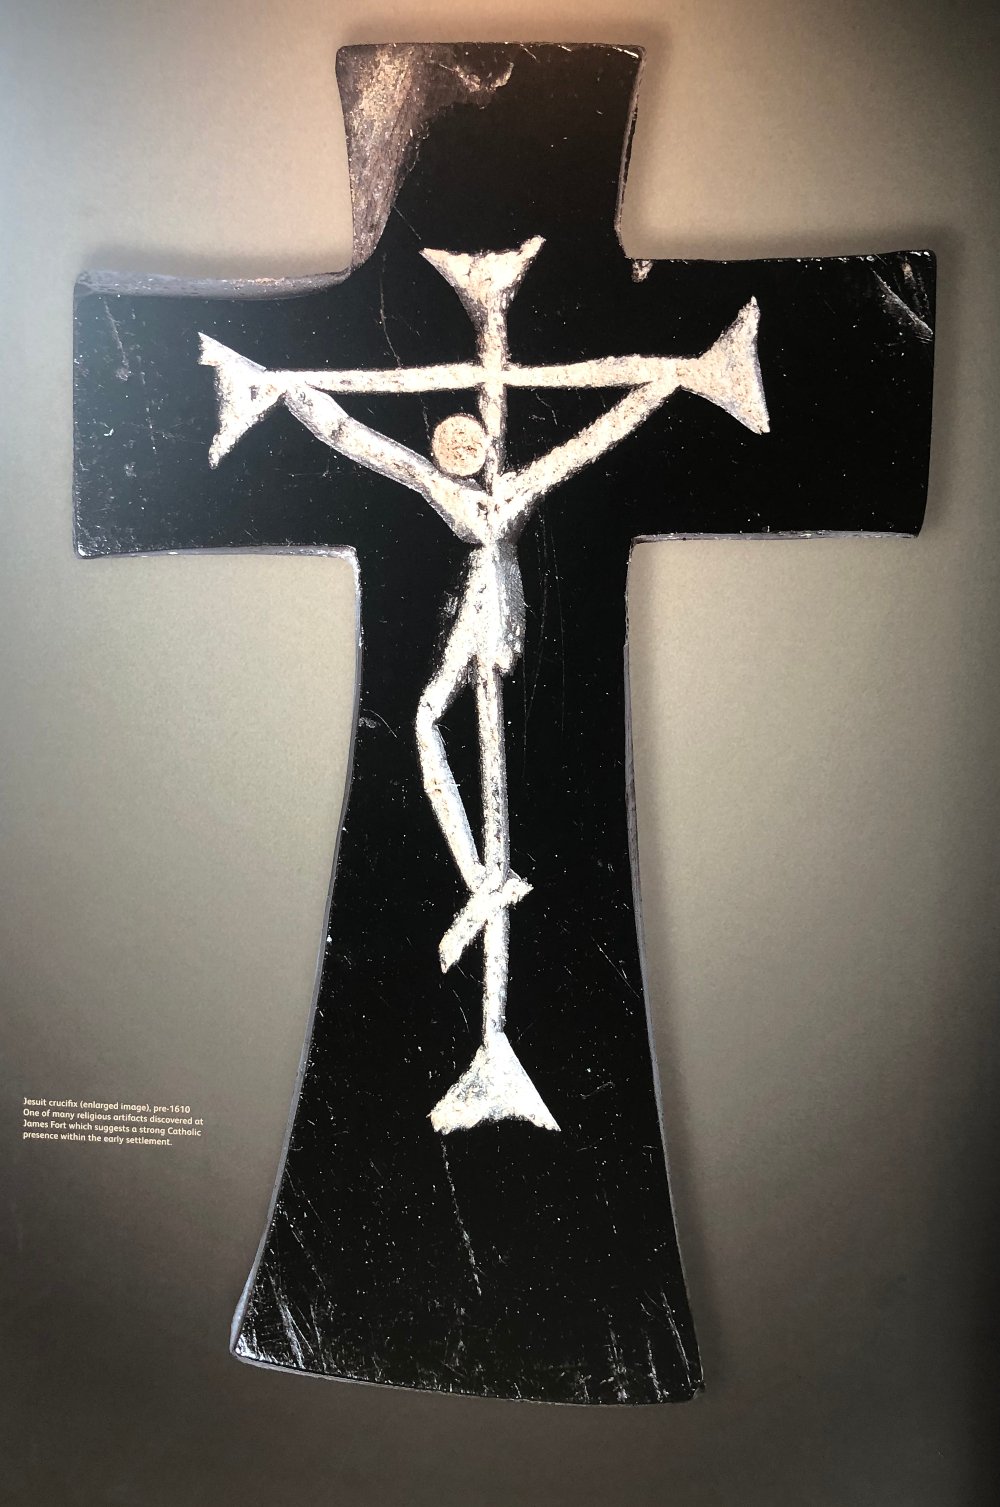 jet crucifix at Jamestown VA